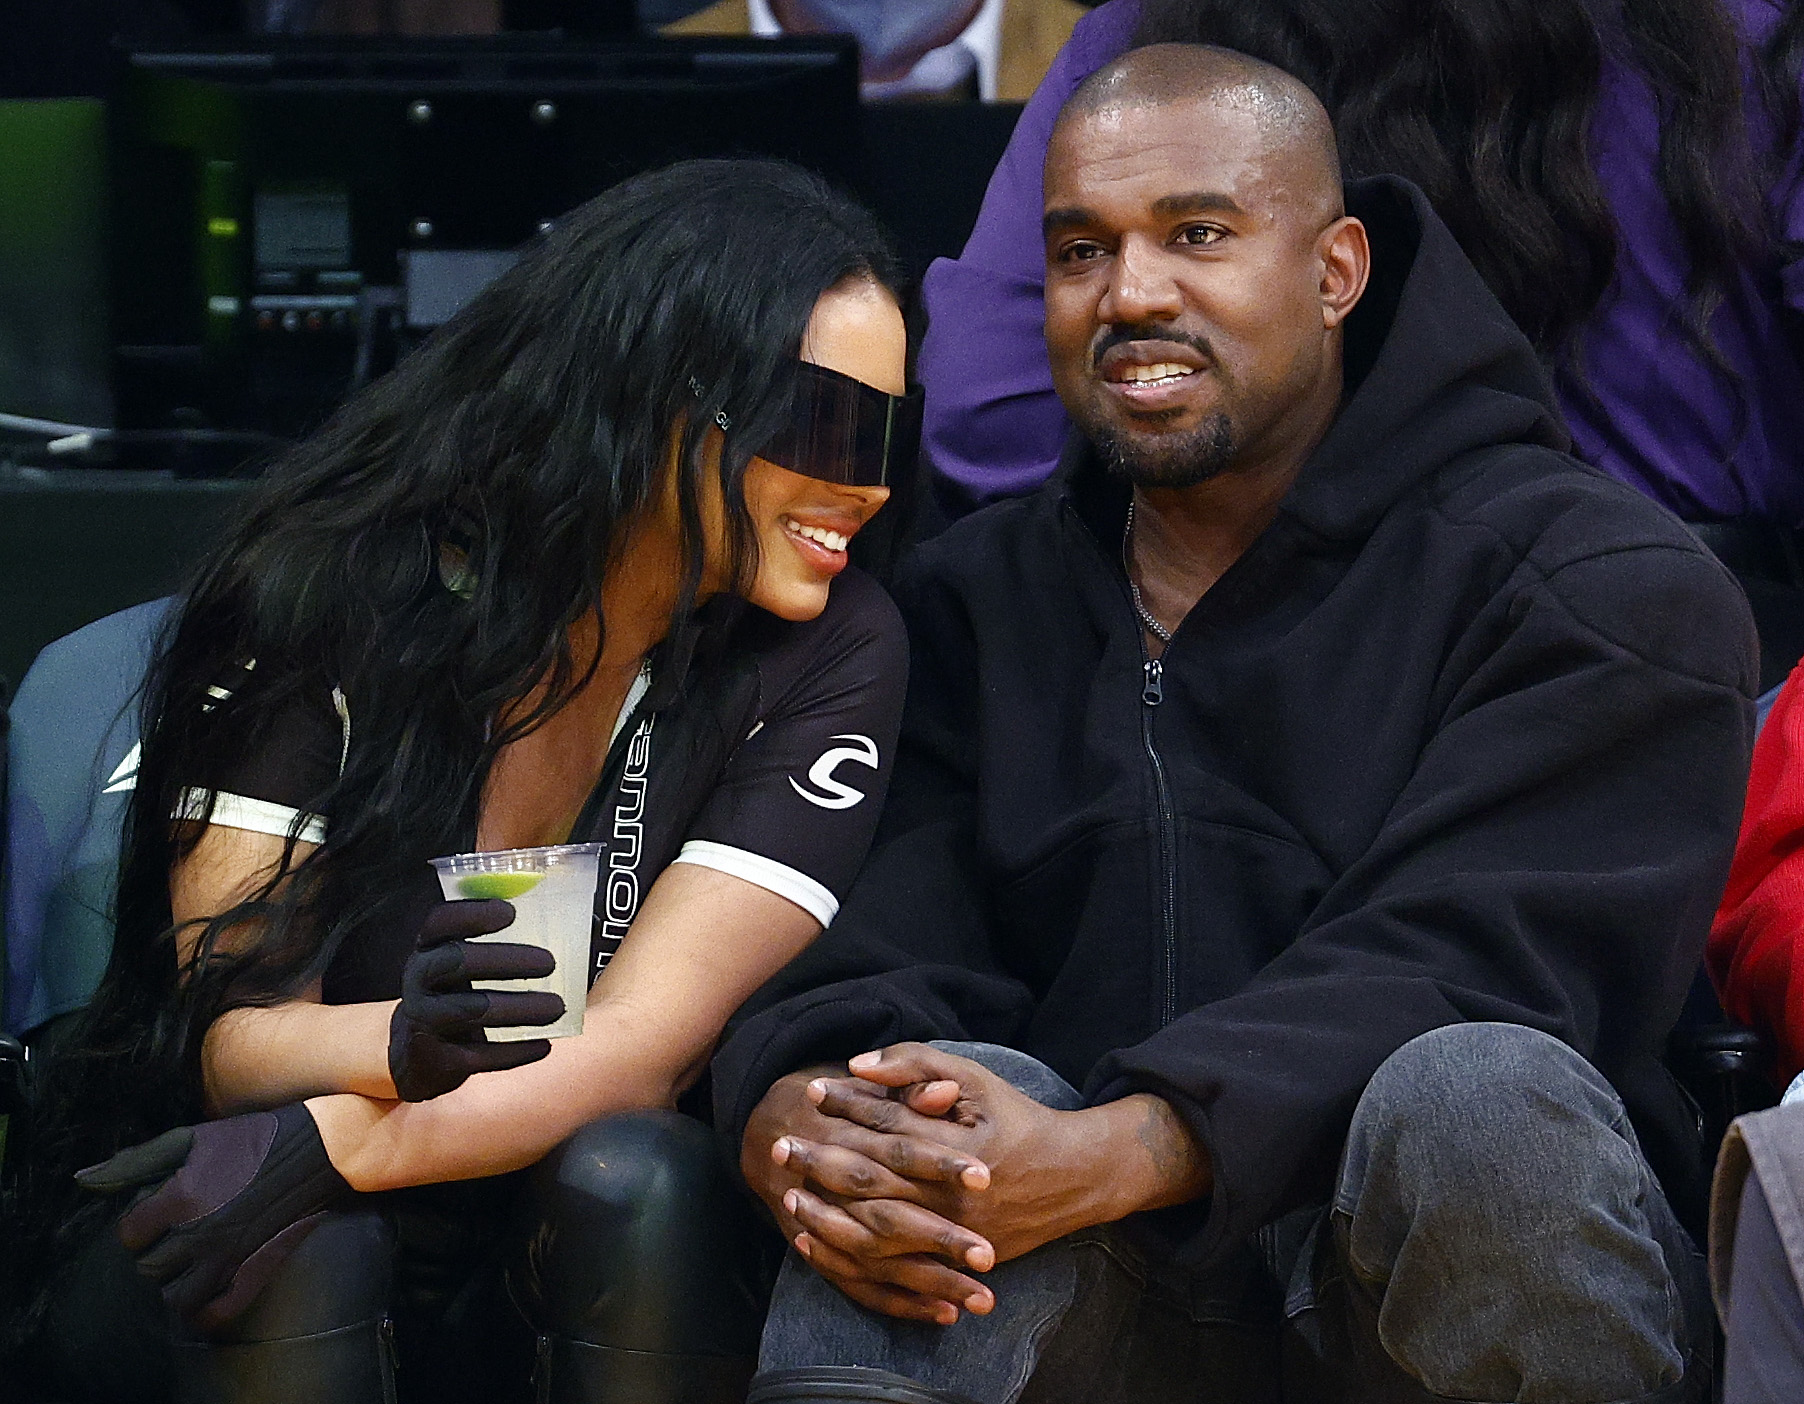 Kanye West Out Of Grammys Lineup Due To “Concerning Online Behavior